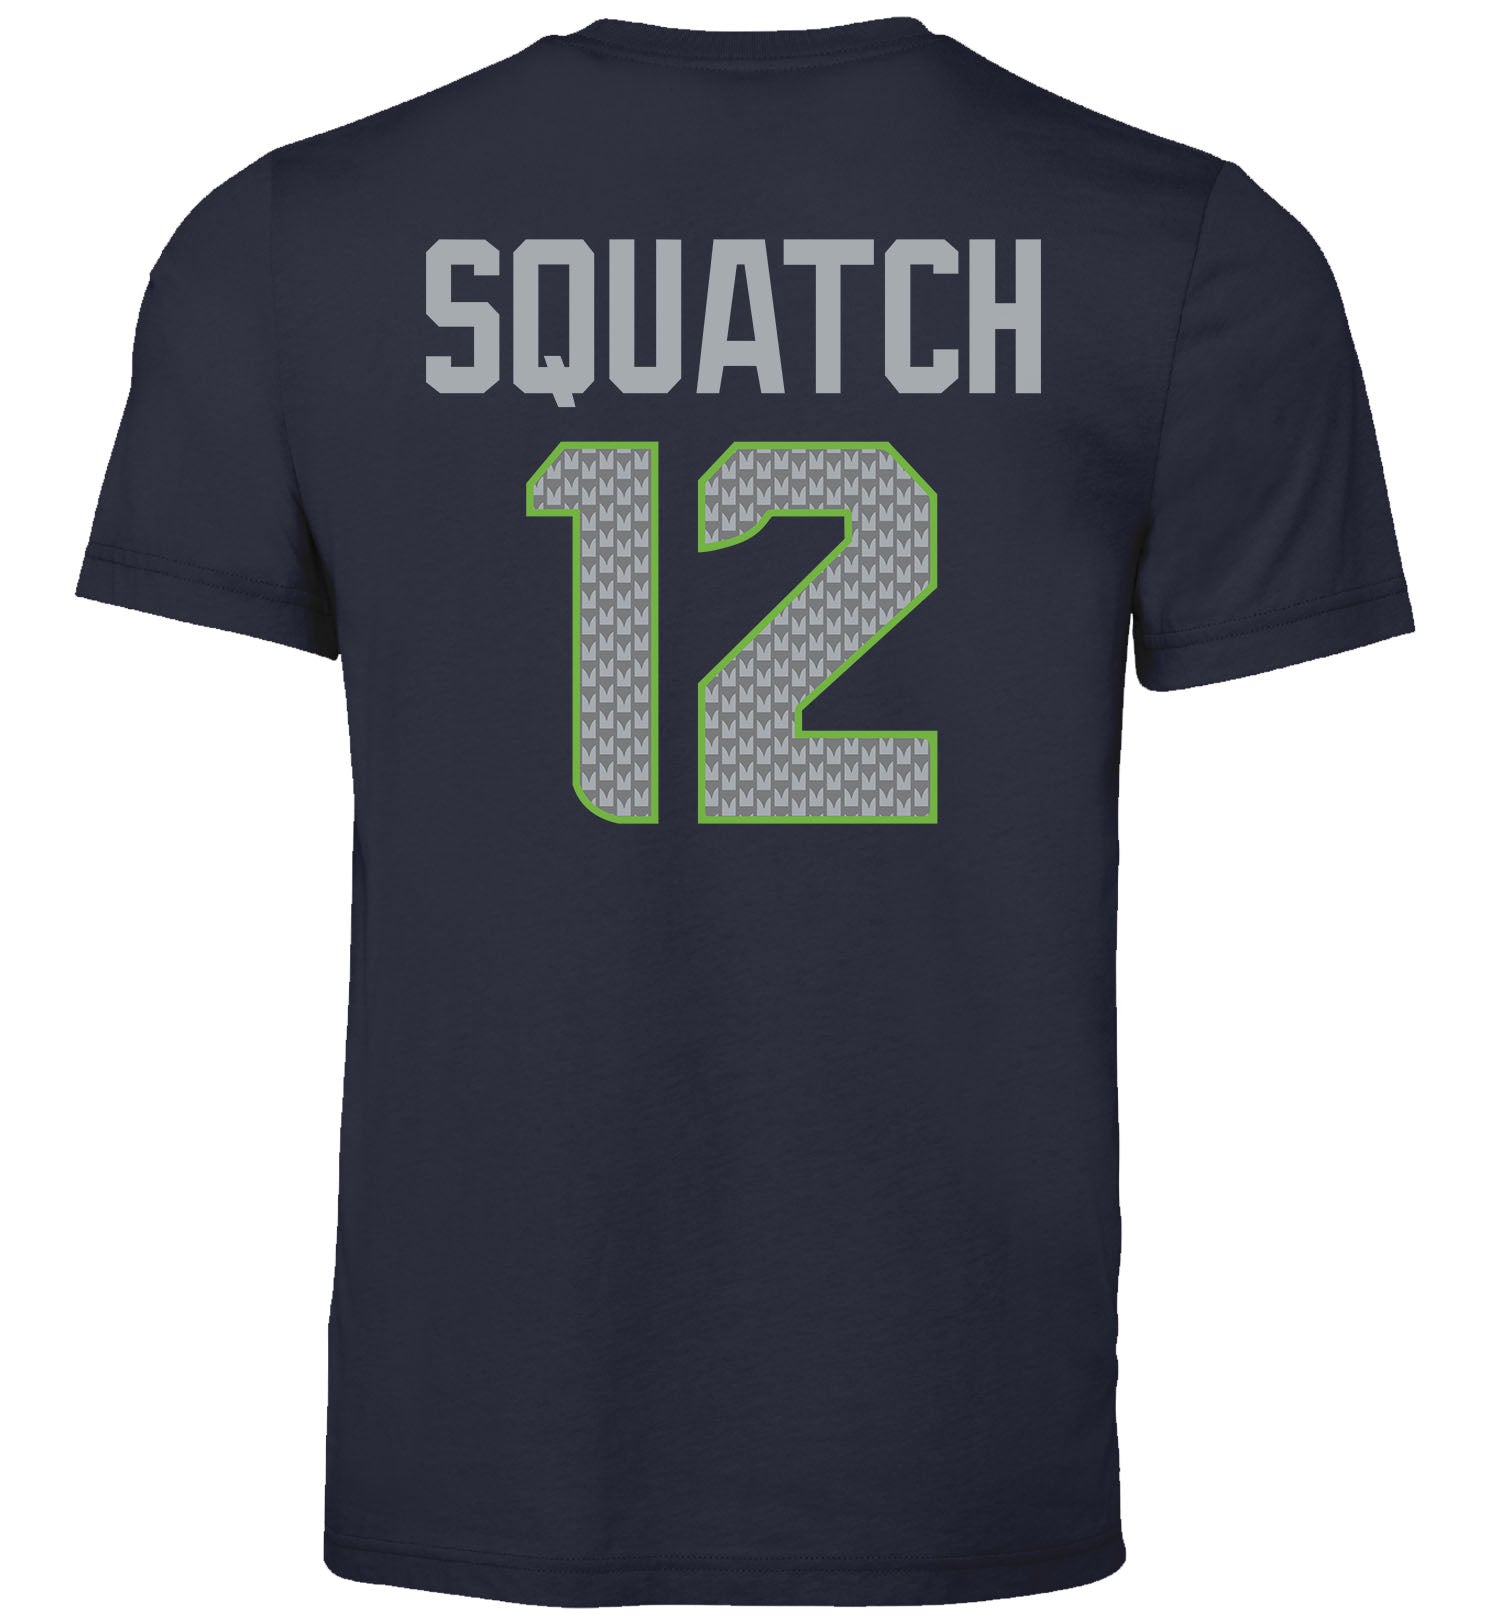 Bigfoot Shirt - 12th Man Football Squatch - Short Sleeve - Back - Navy